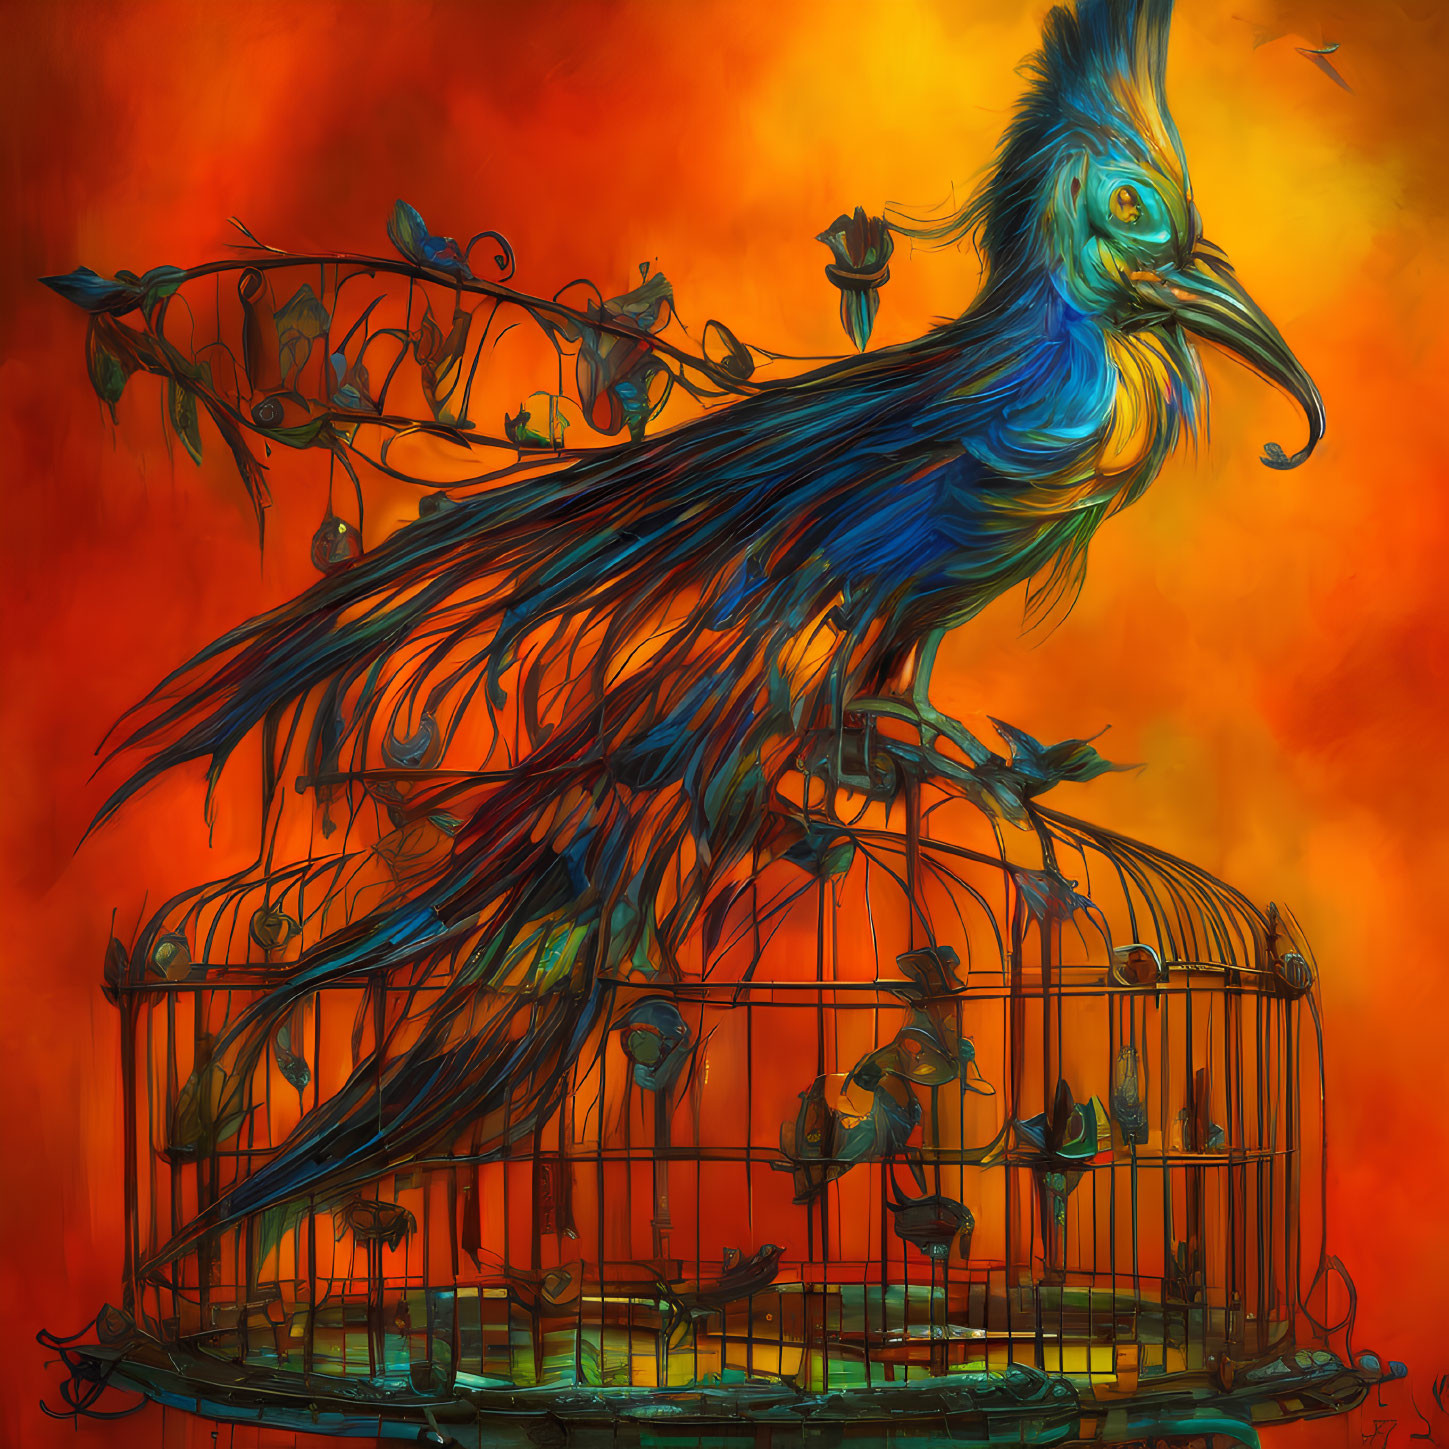 Colorful illustration of a blue bird on a birdcage with smaller birds, set against orange backdrop